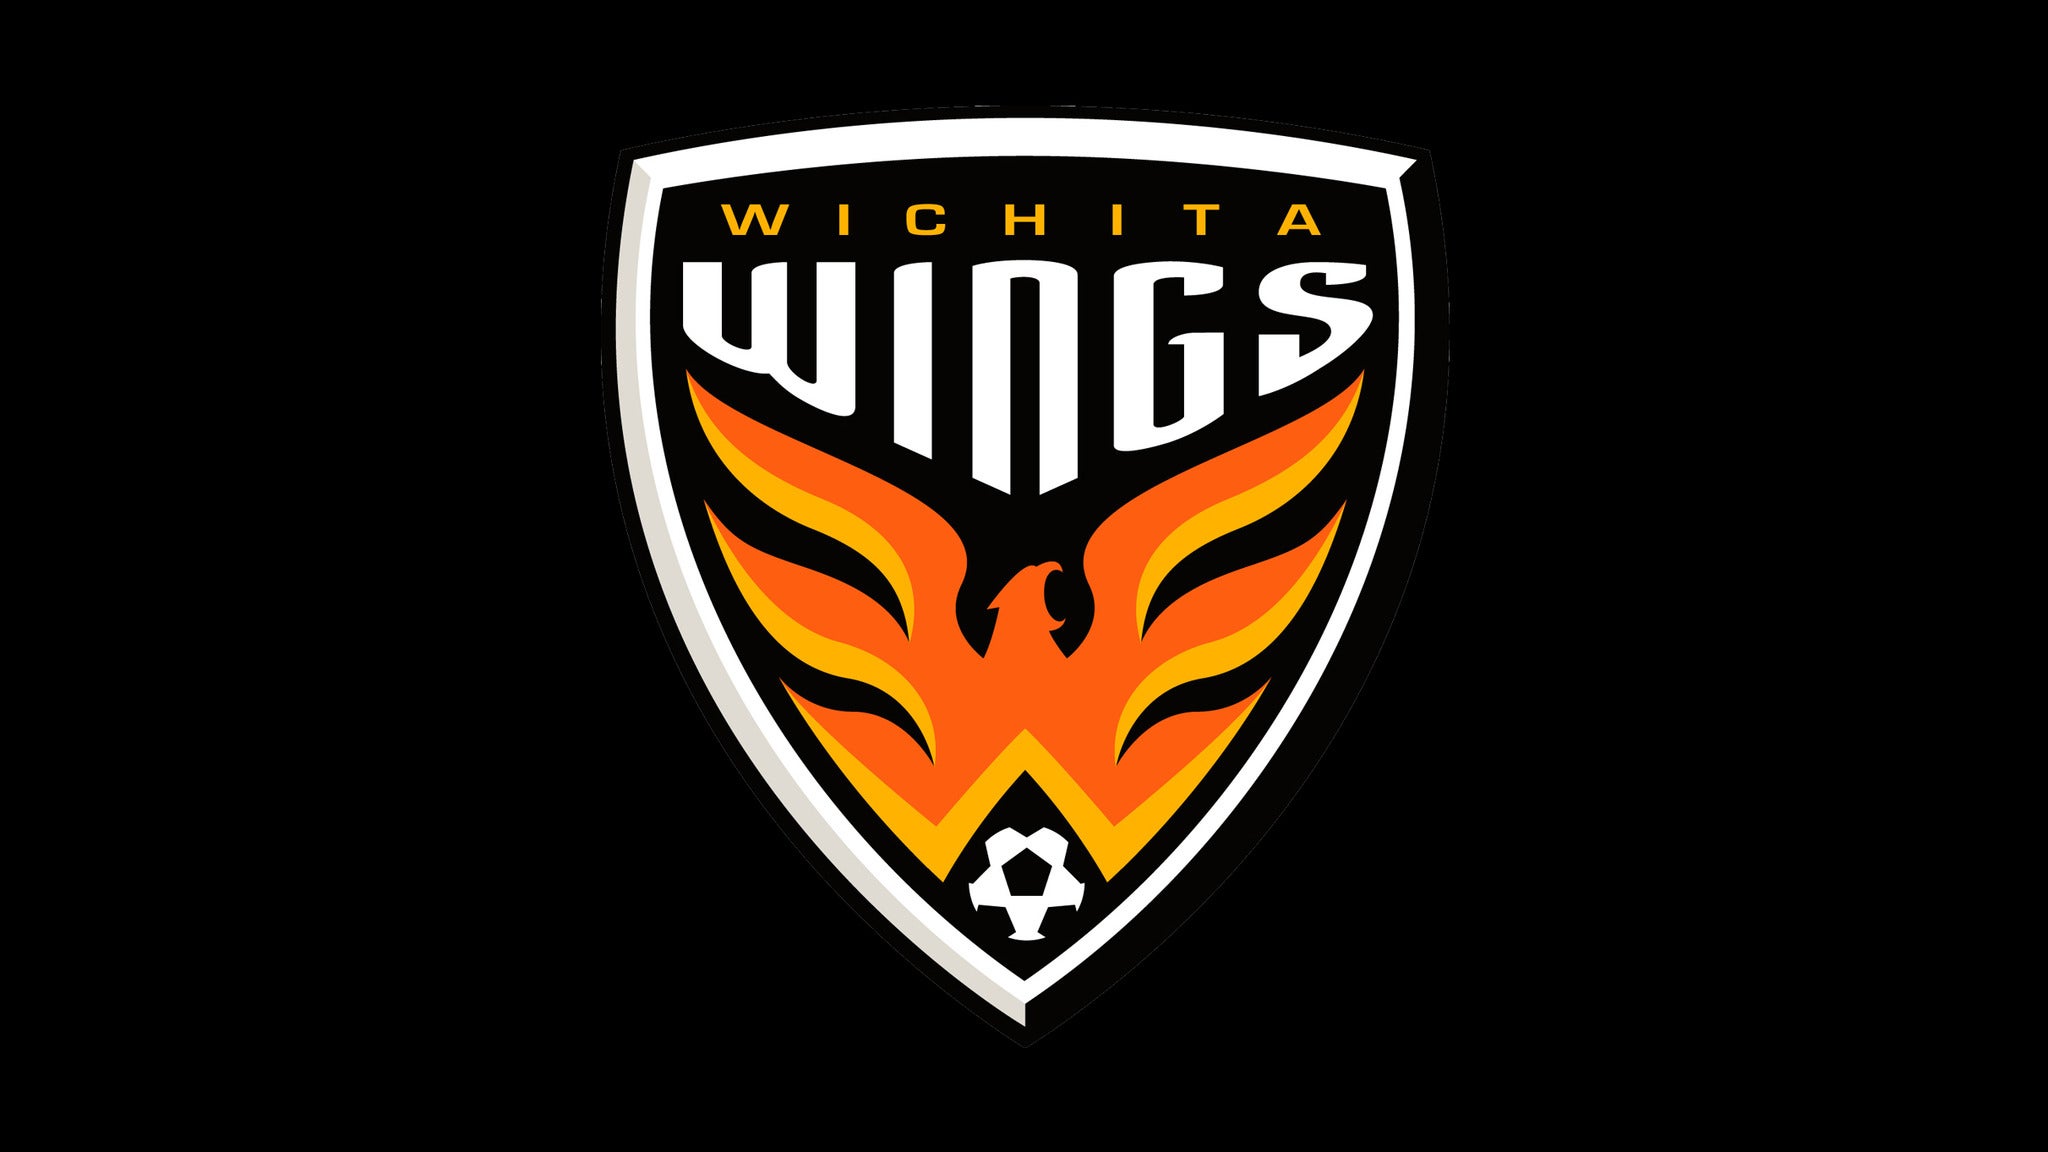 Wichita Wings Tickets Single Game Tickets & Schedule